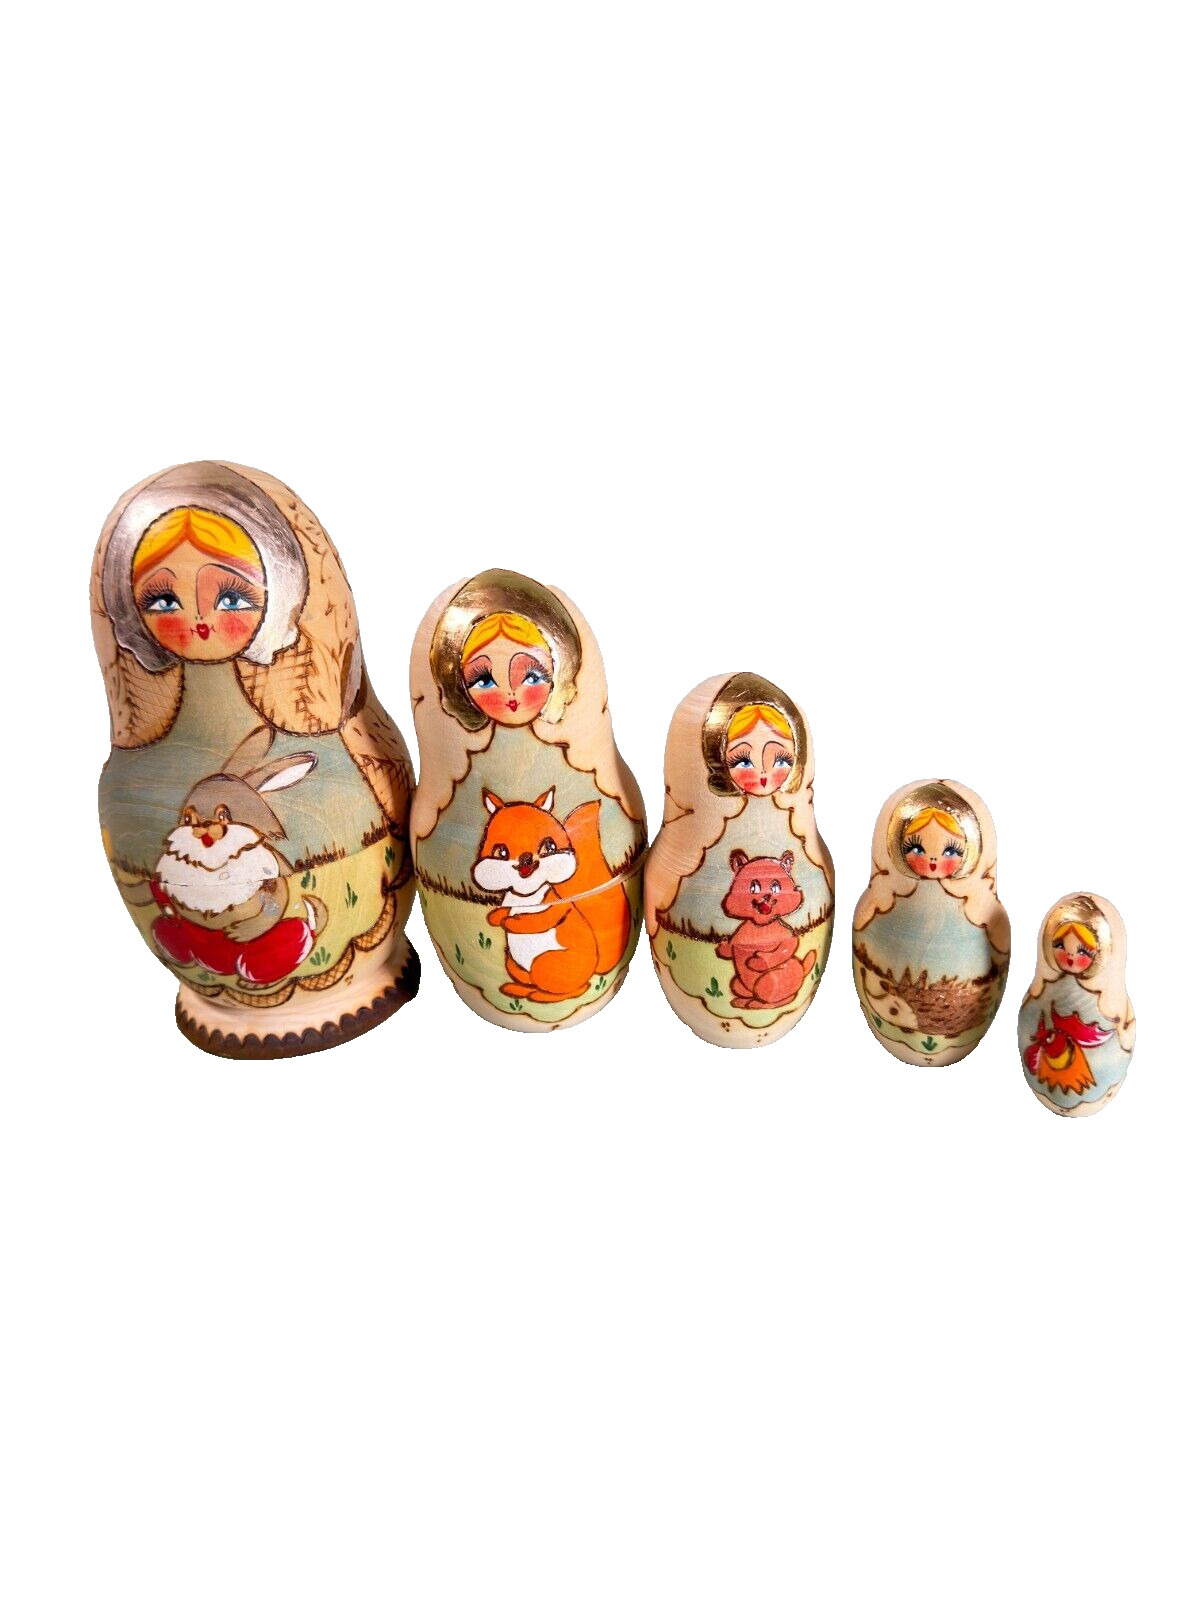 Vintage 5 Piece Russian Matryoshka Country Animals Nesting Doll Metallic Accents